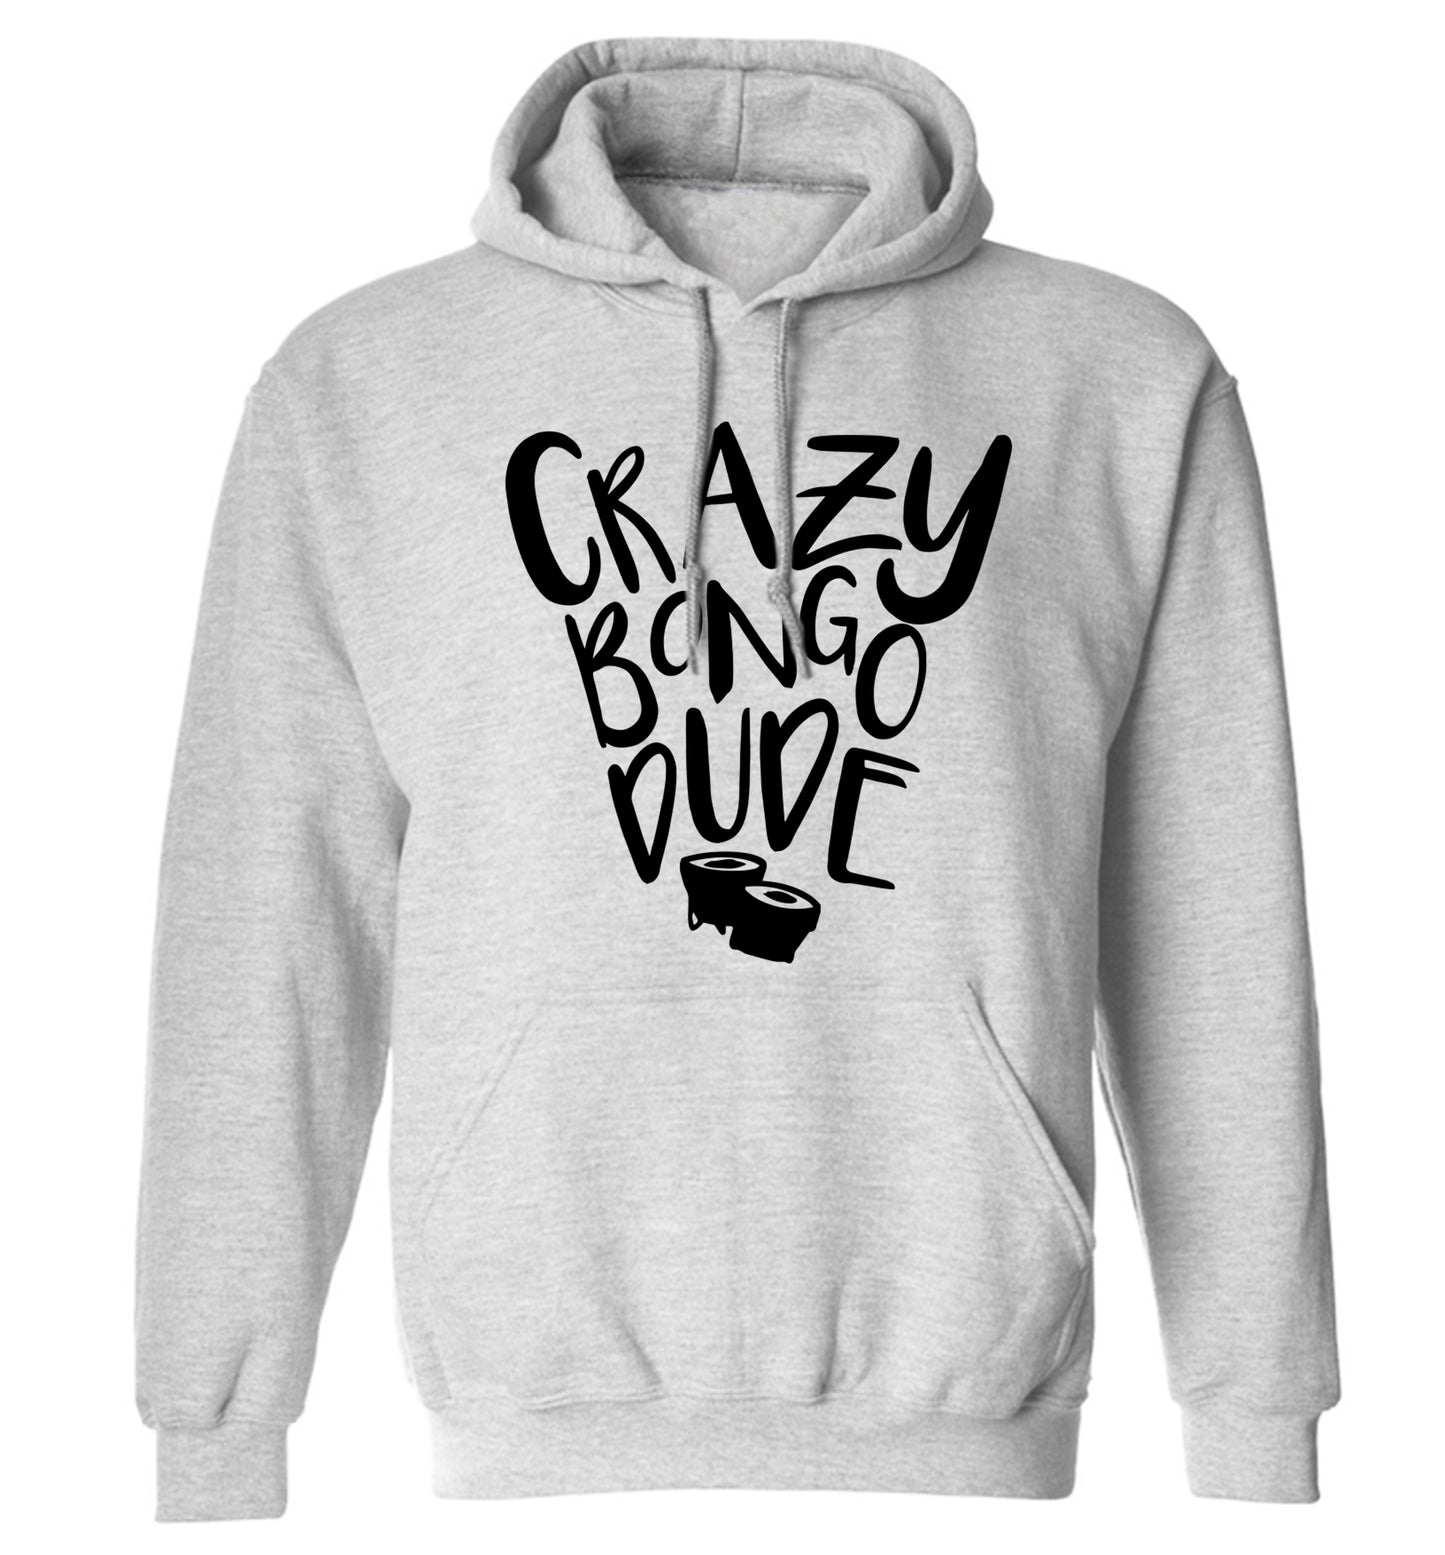 Crazy bongo dude adults unisex grey hoodie 2XL